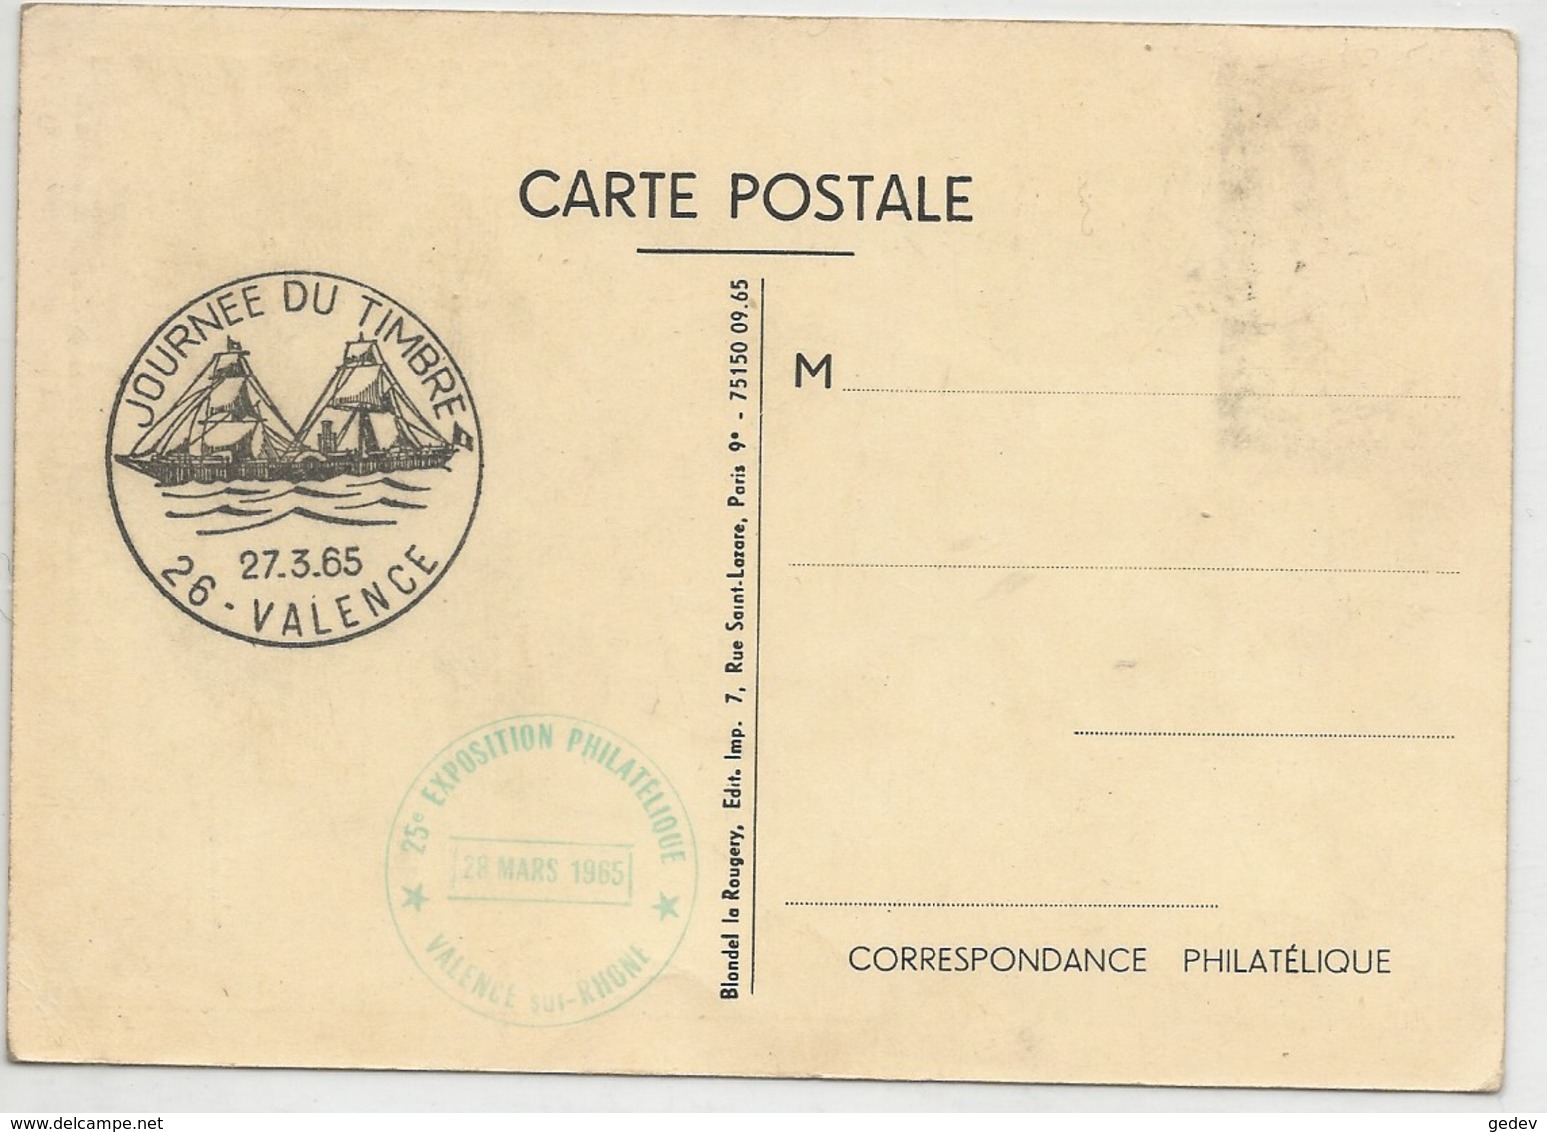 France 26, Journée Du Timbre 1965, Valence (27.3.1965) 10x15 - Briefmarkenmessen